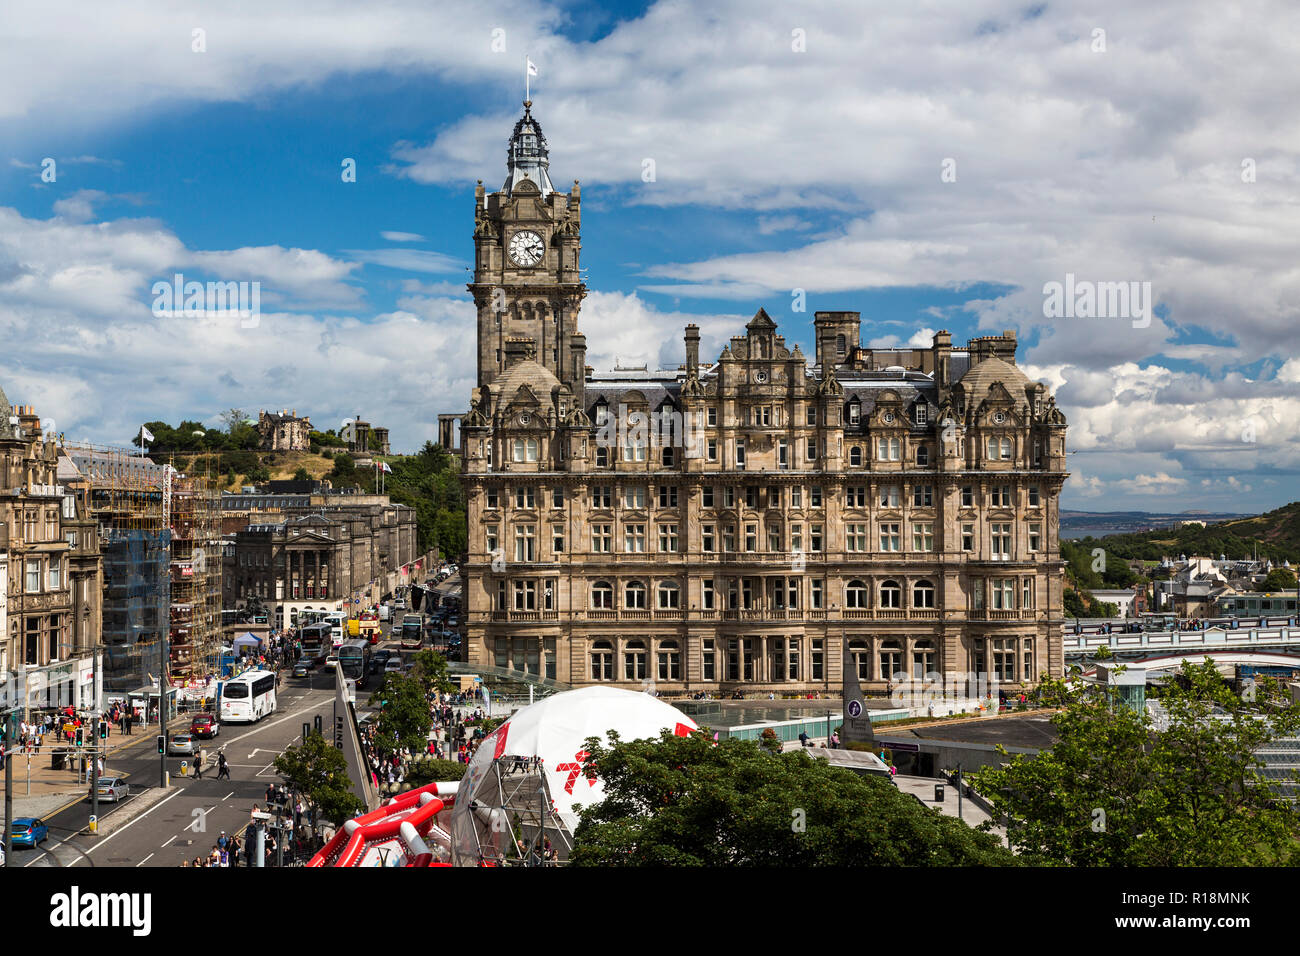 Balmoral Hotel and Princes Street in Summer sunshine, Edinburgh, Scotland Stock Photo